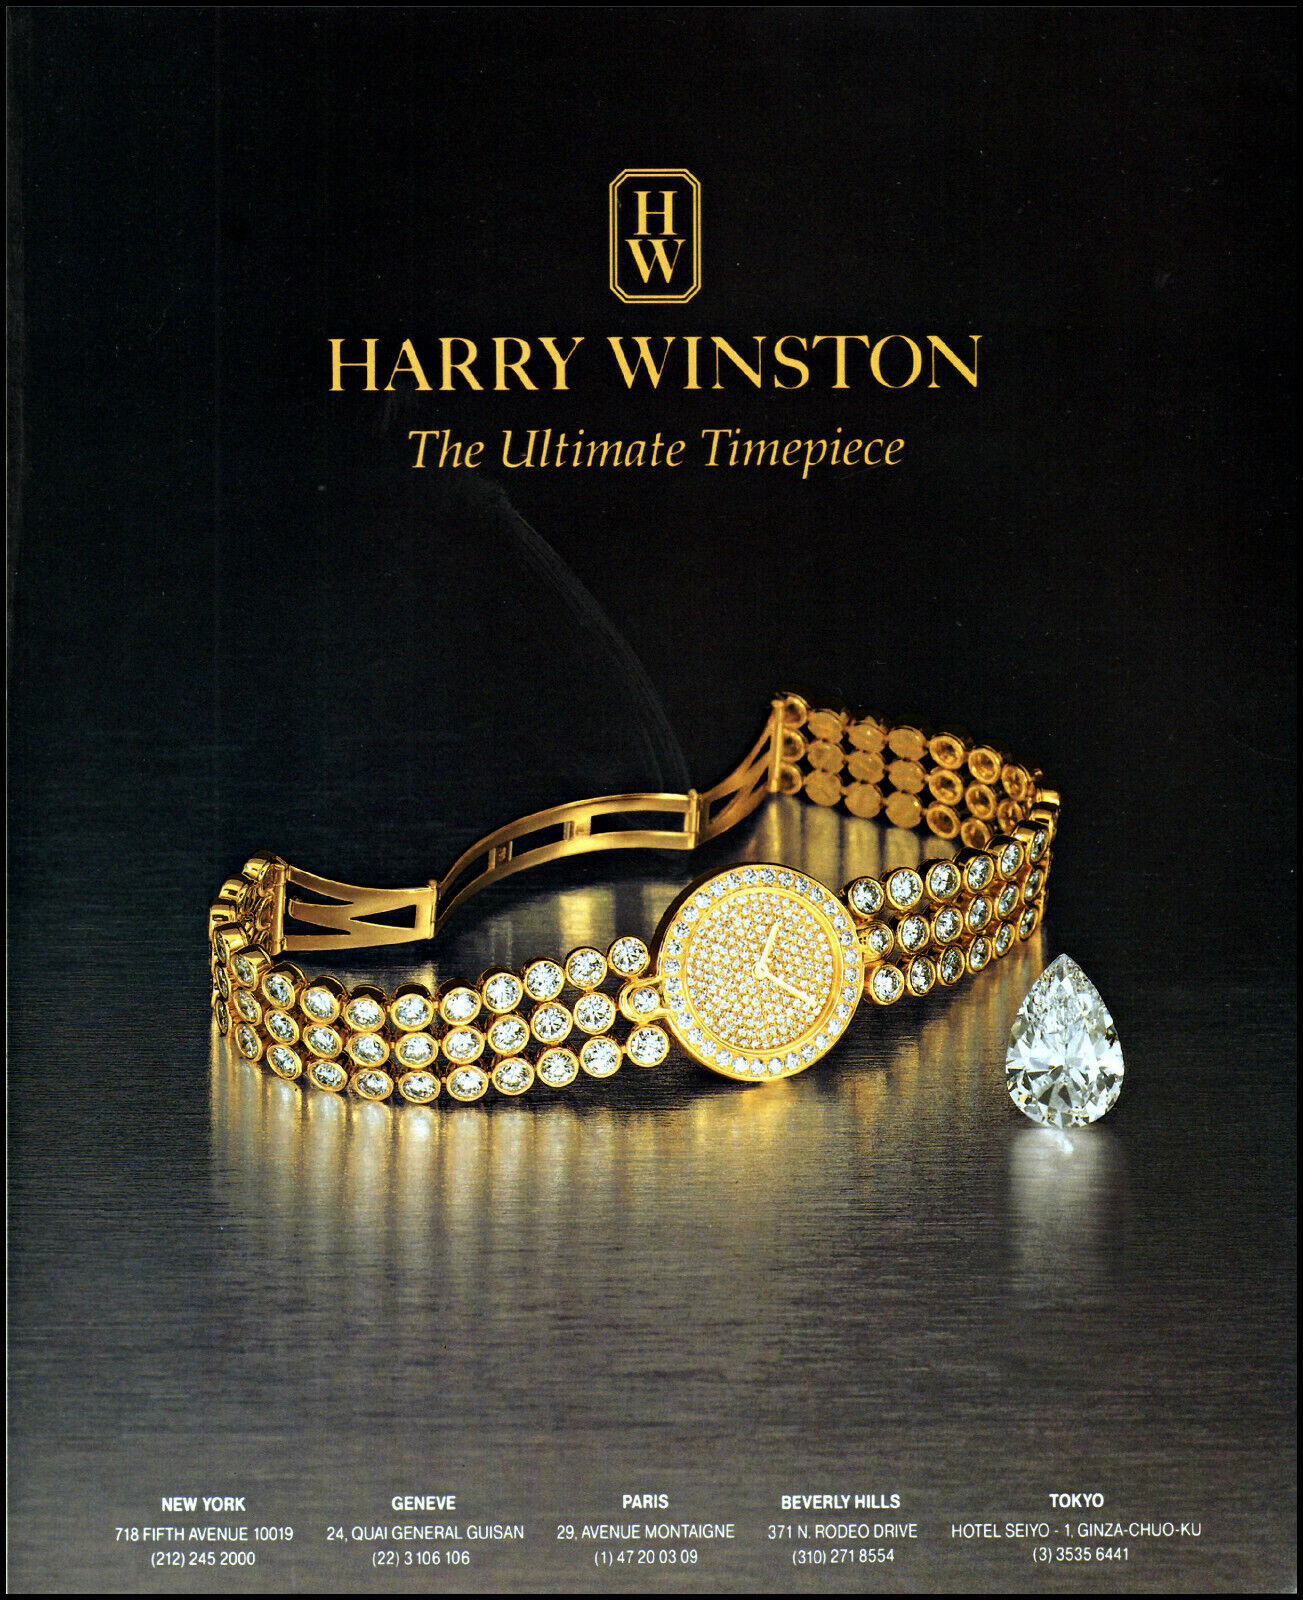 1993 Harry Winston gold diamond watch ultra timepiece retro photo print ad ads2